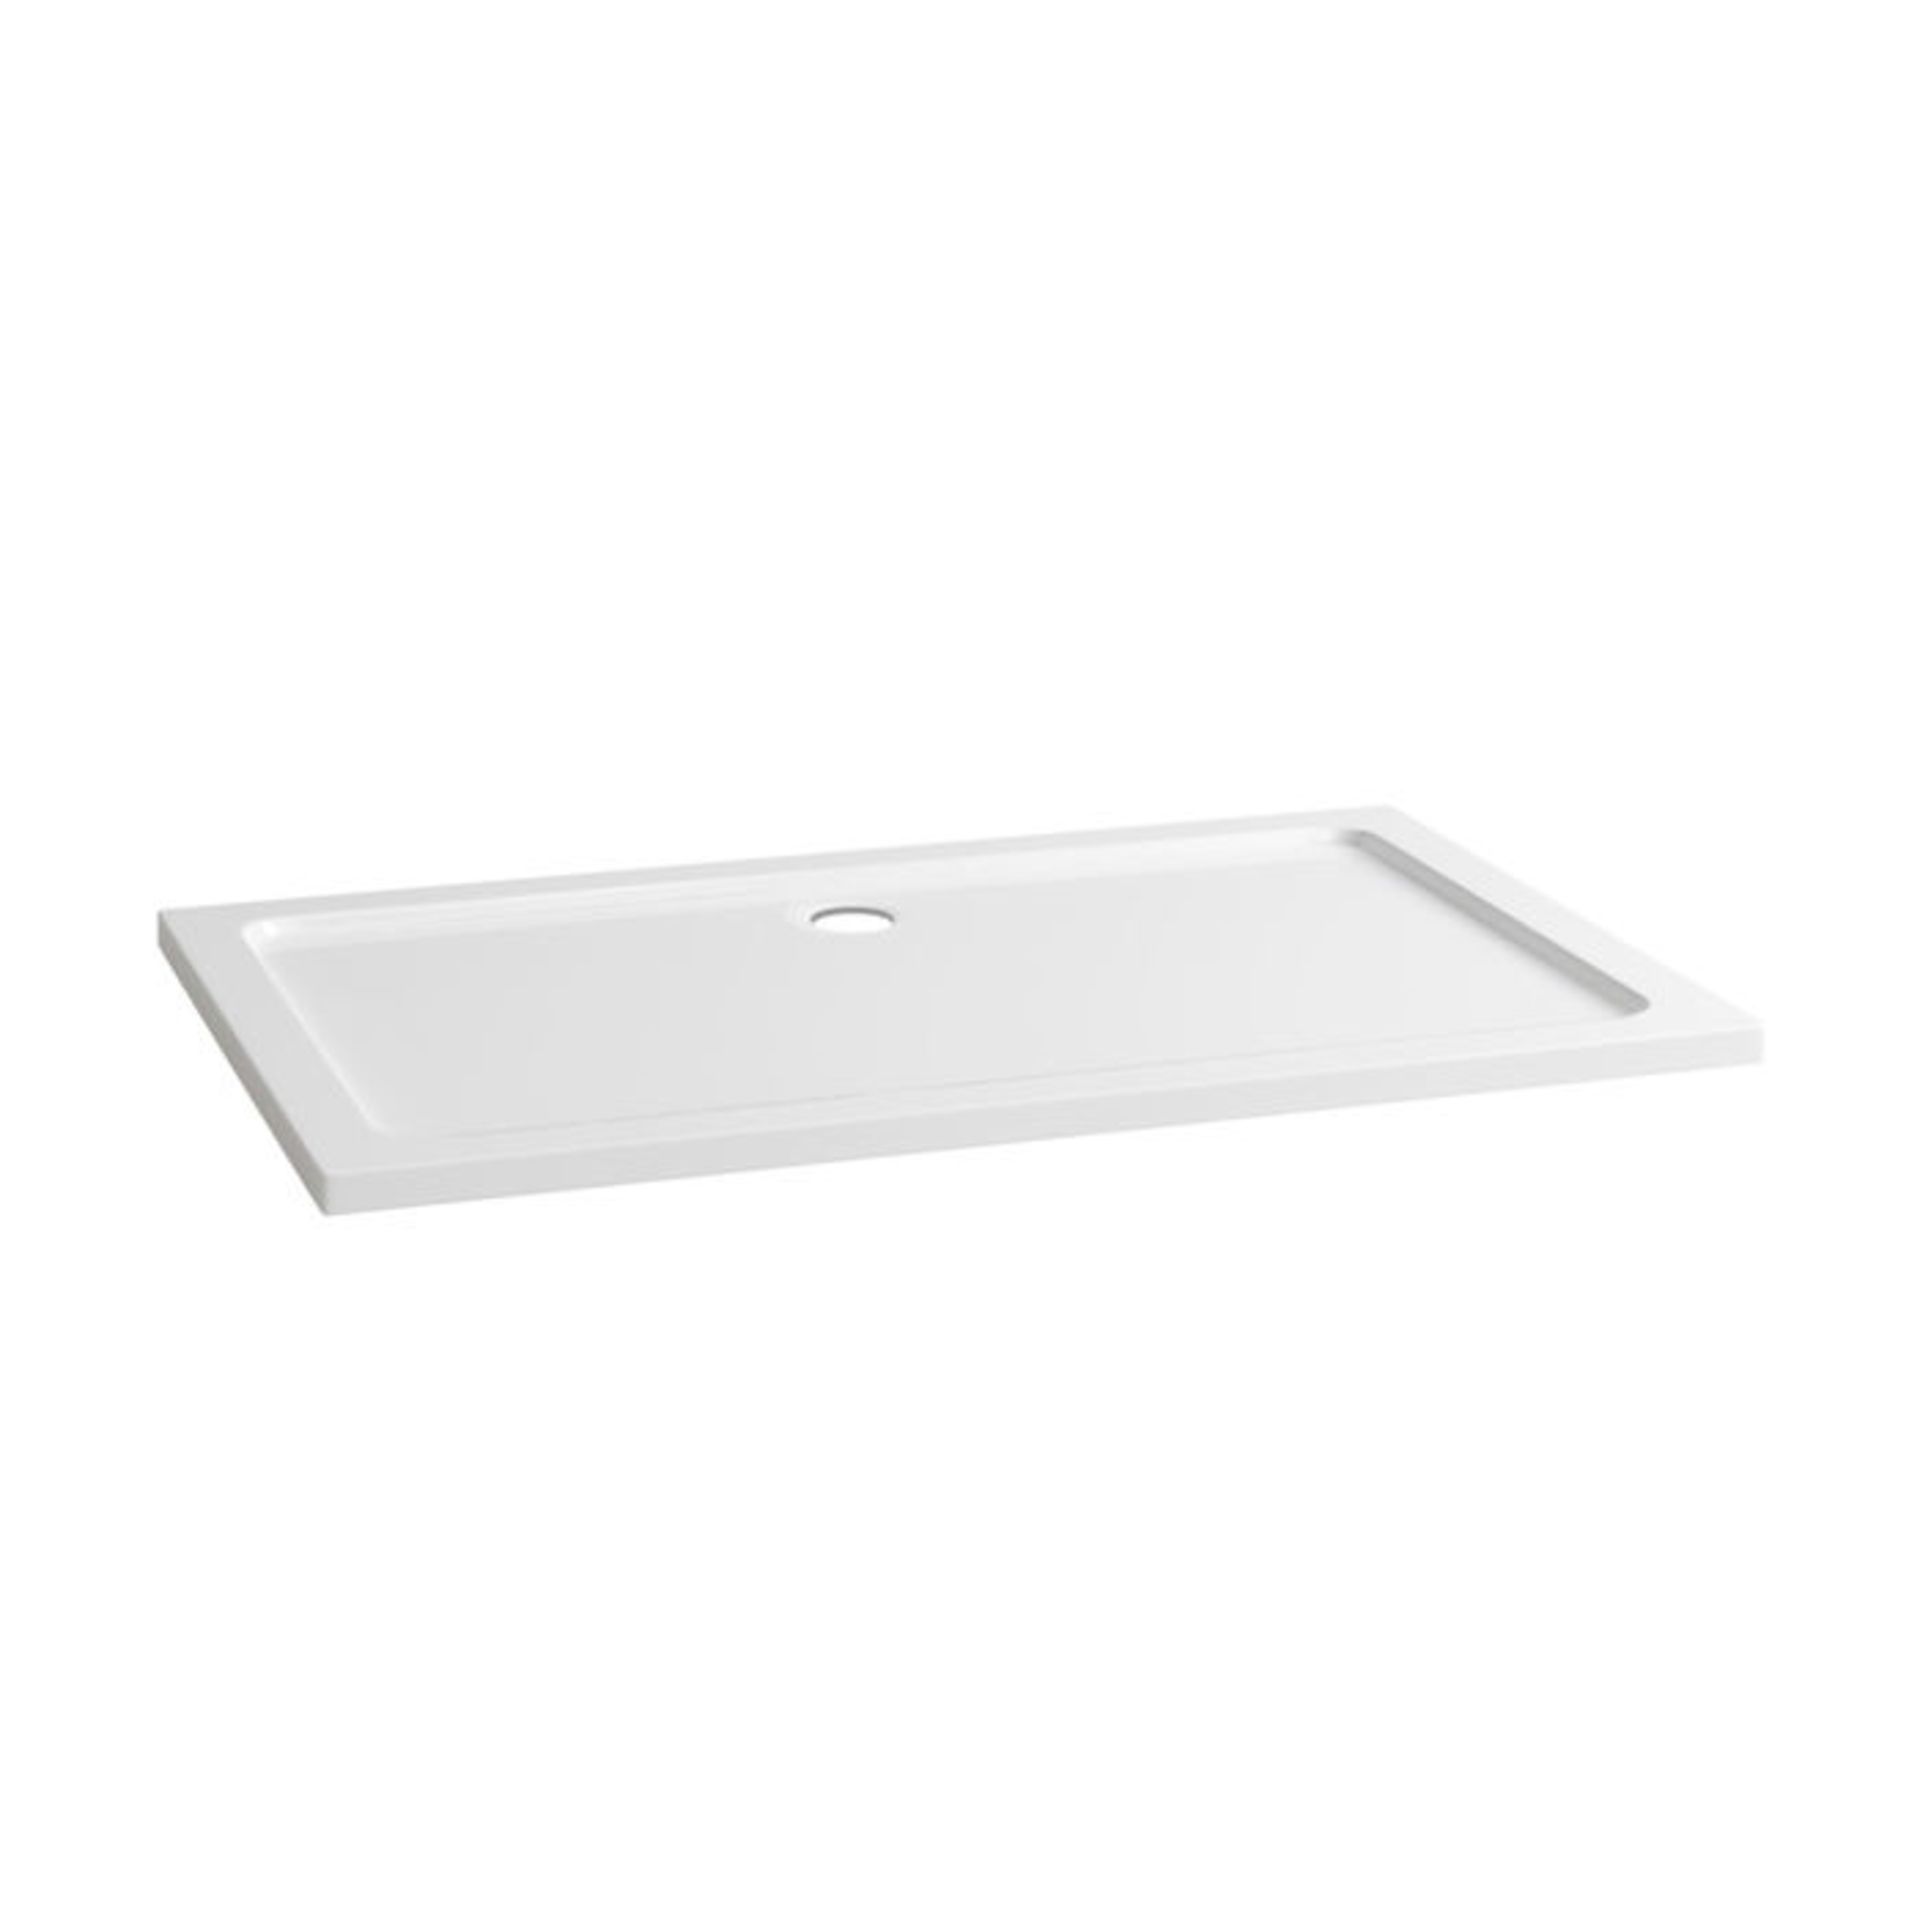 (TY31) 1400x900mm Rectangular Ultra Slim Stone Shower Tray. Low profile ultra slim design Gel coated - Image 2 of 2